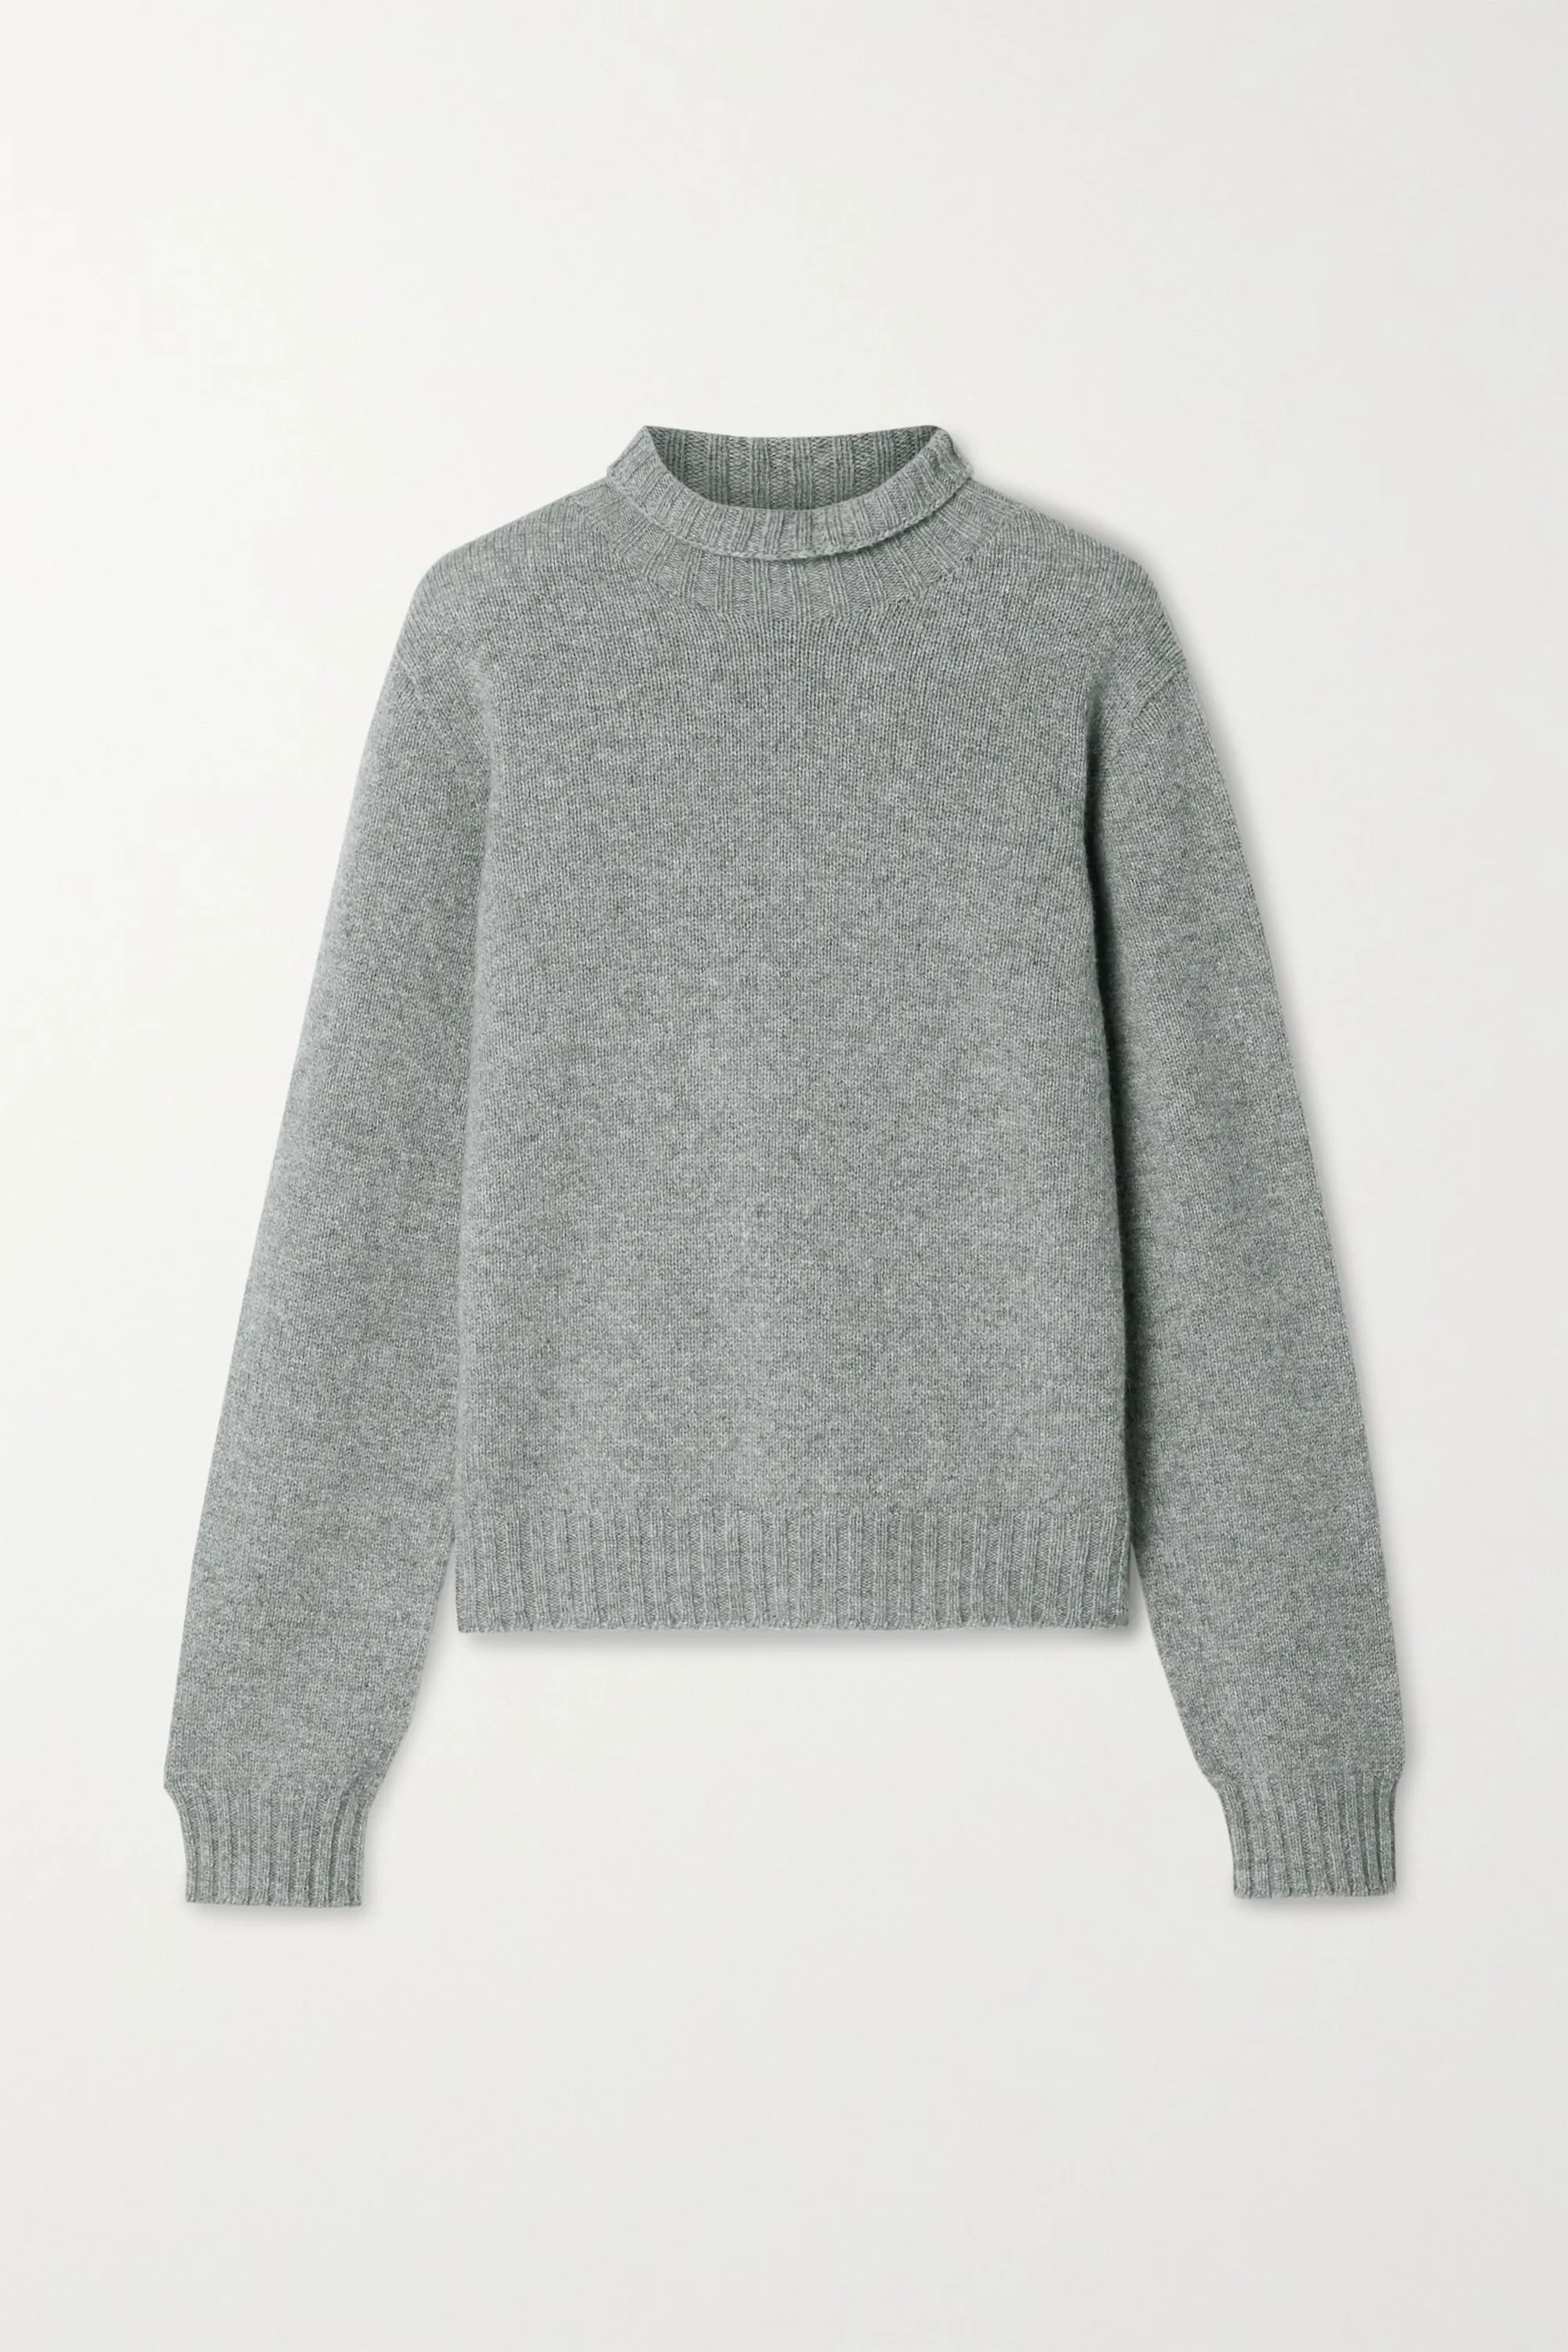 Gray Kensington cashmere turtleneck sweater | The Row | NET-A-PORTER | NET-A-PORTER (US)